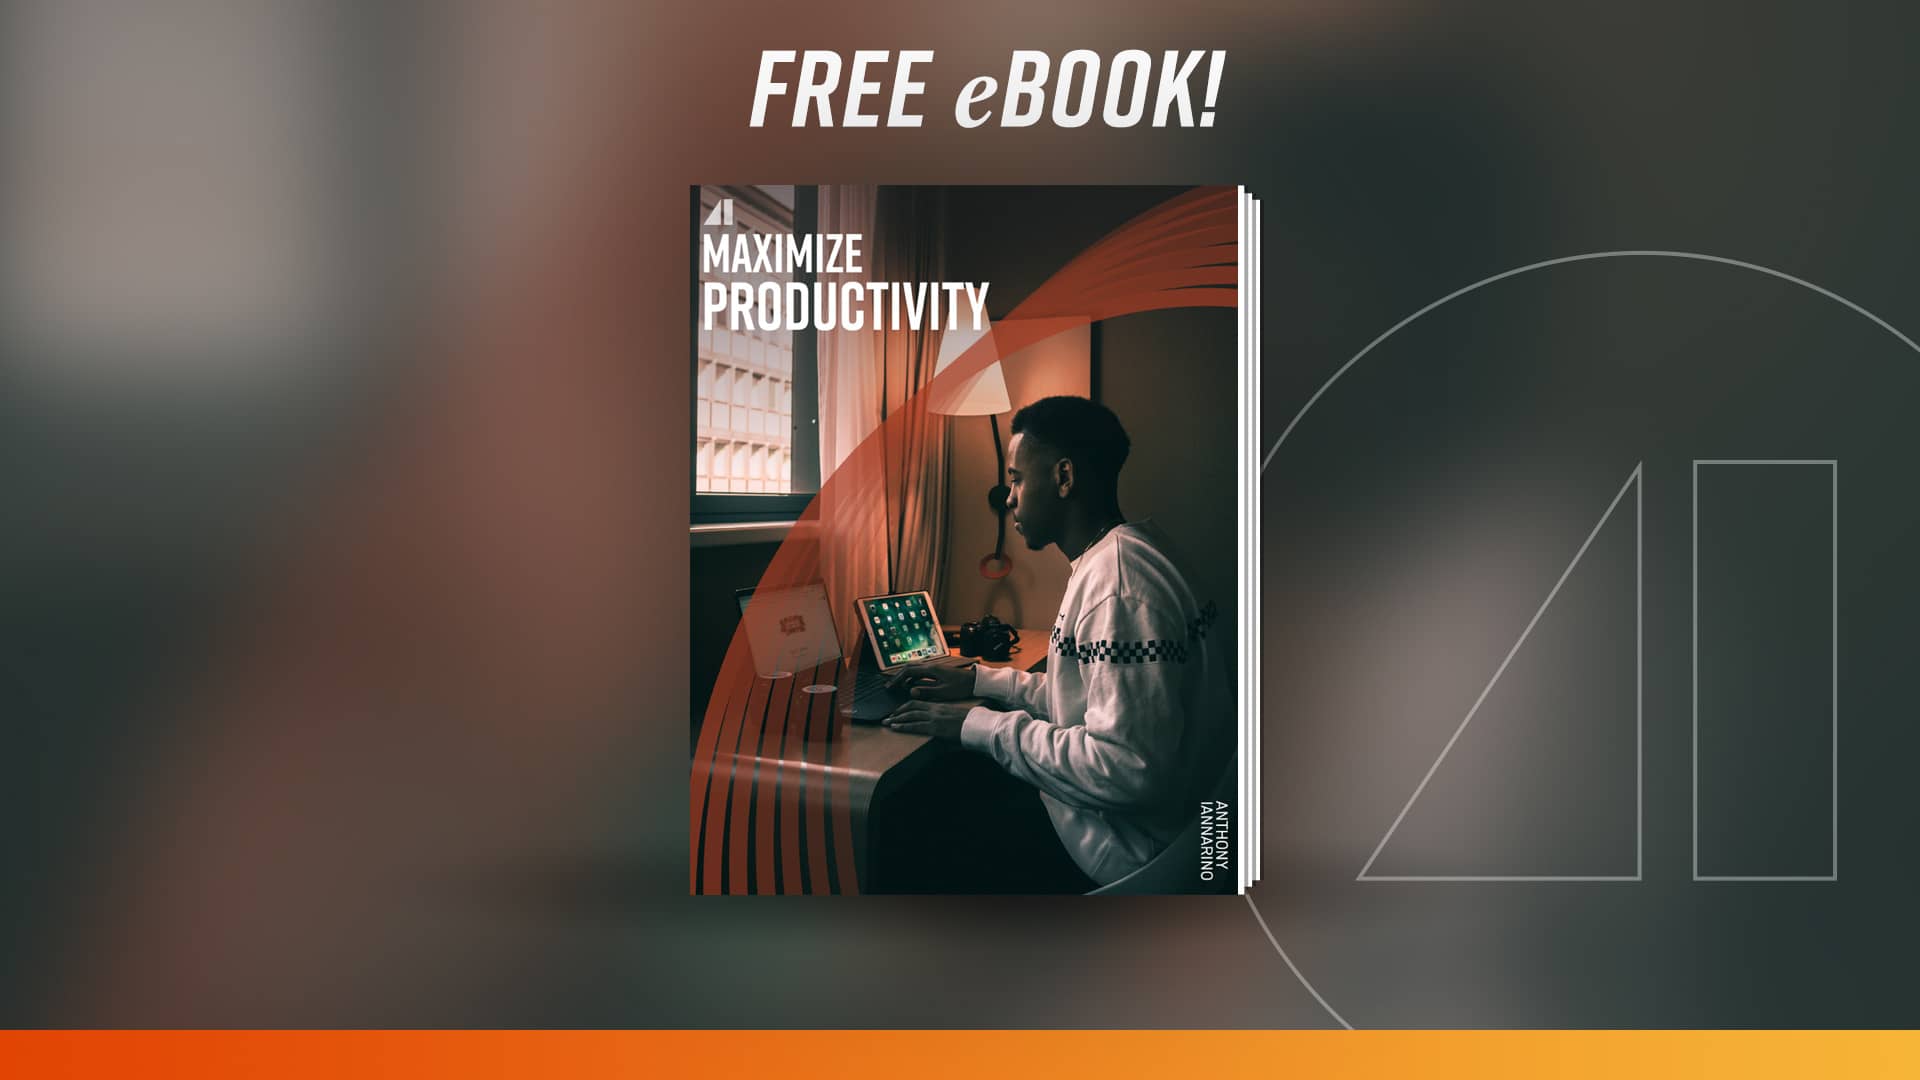 ebook-maximize-productivity-featured (1)